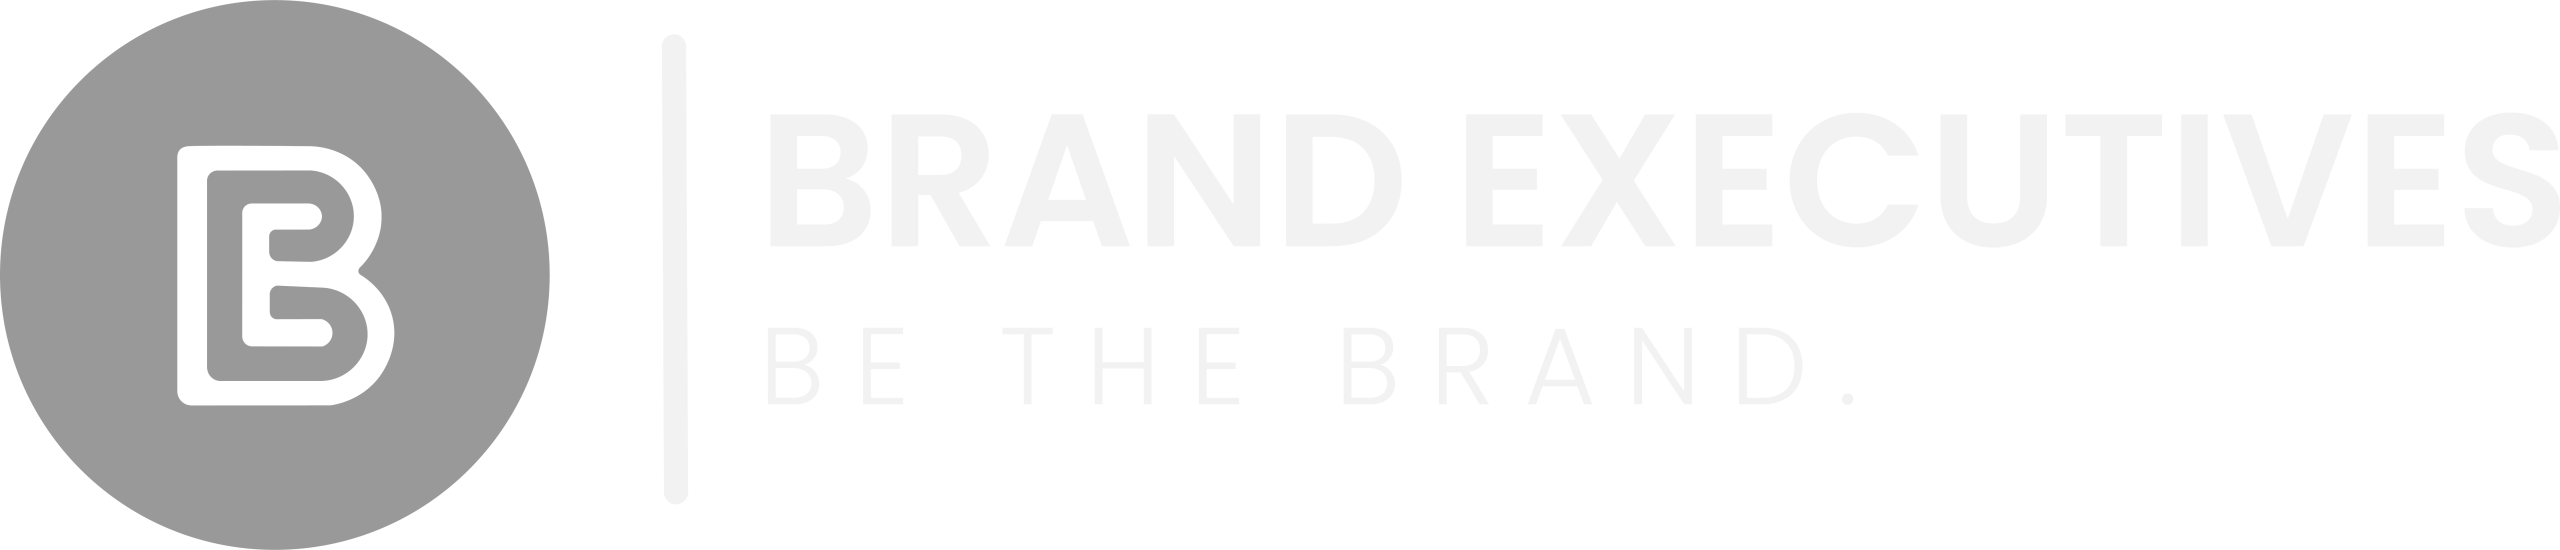 The Brand Executives